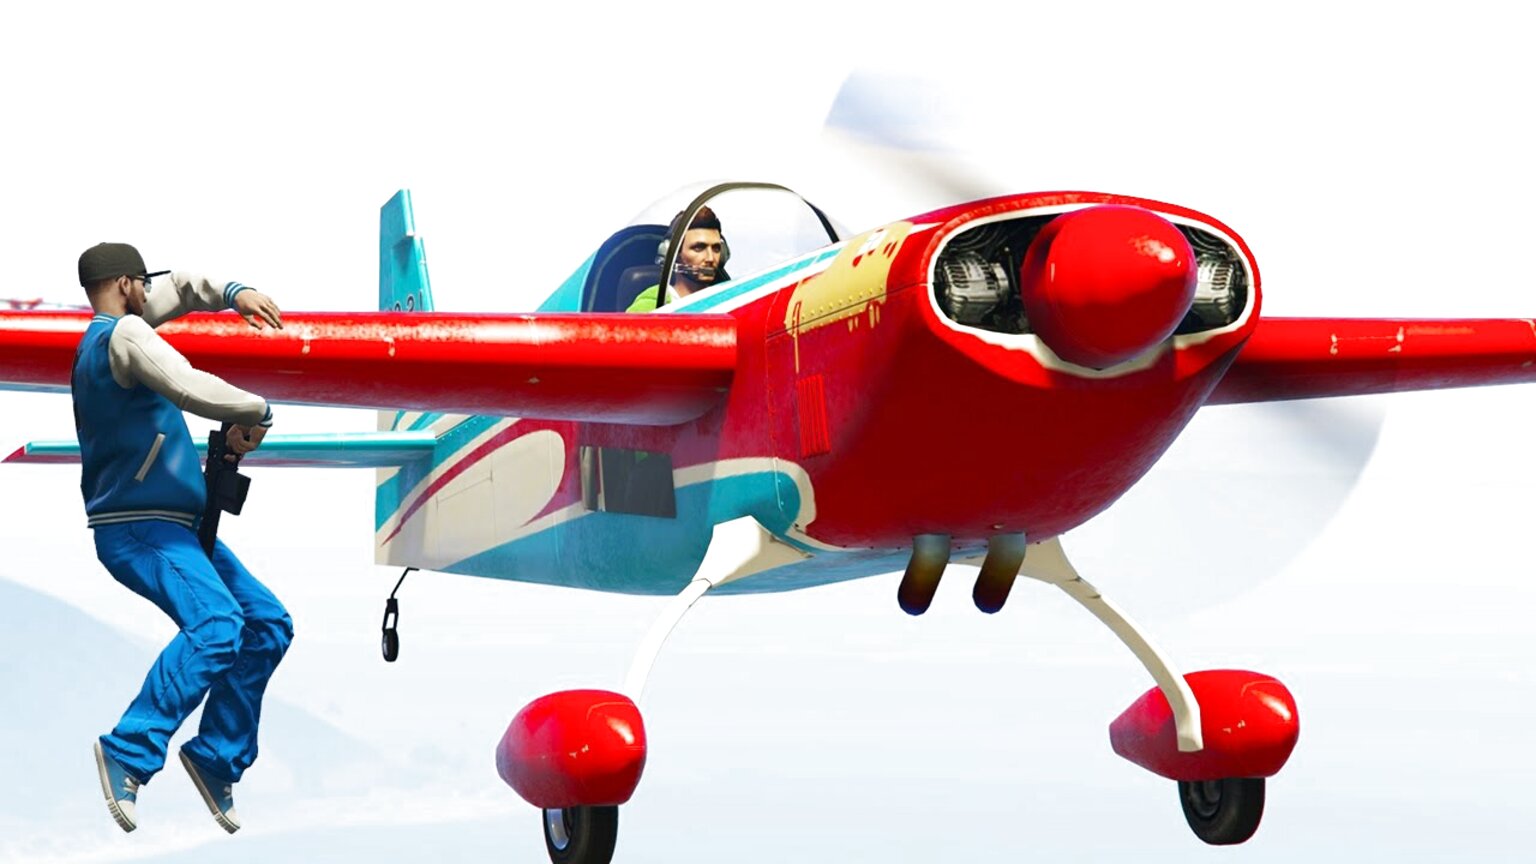 Extreme Plane Stunts Simulator free download